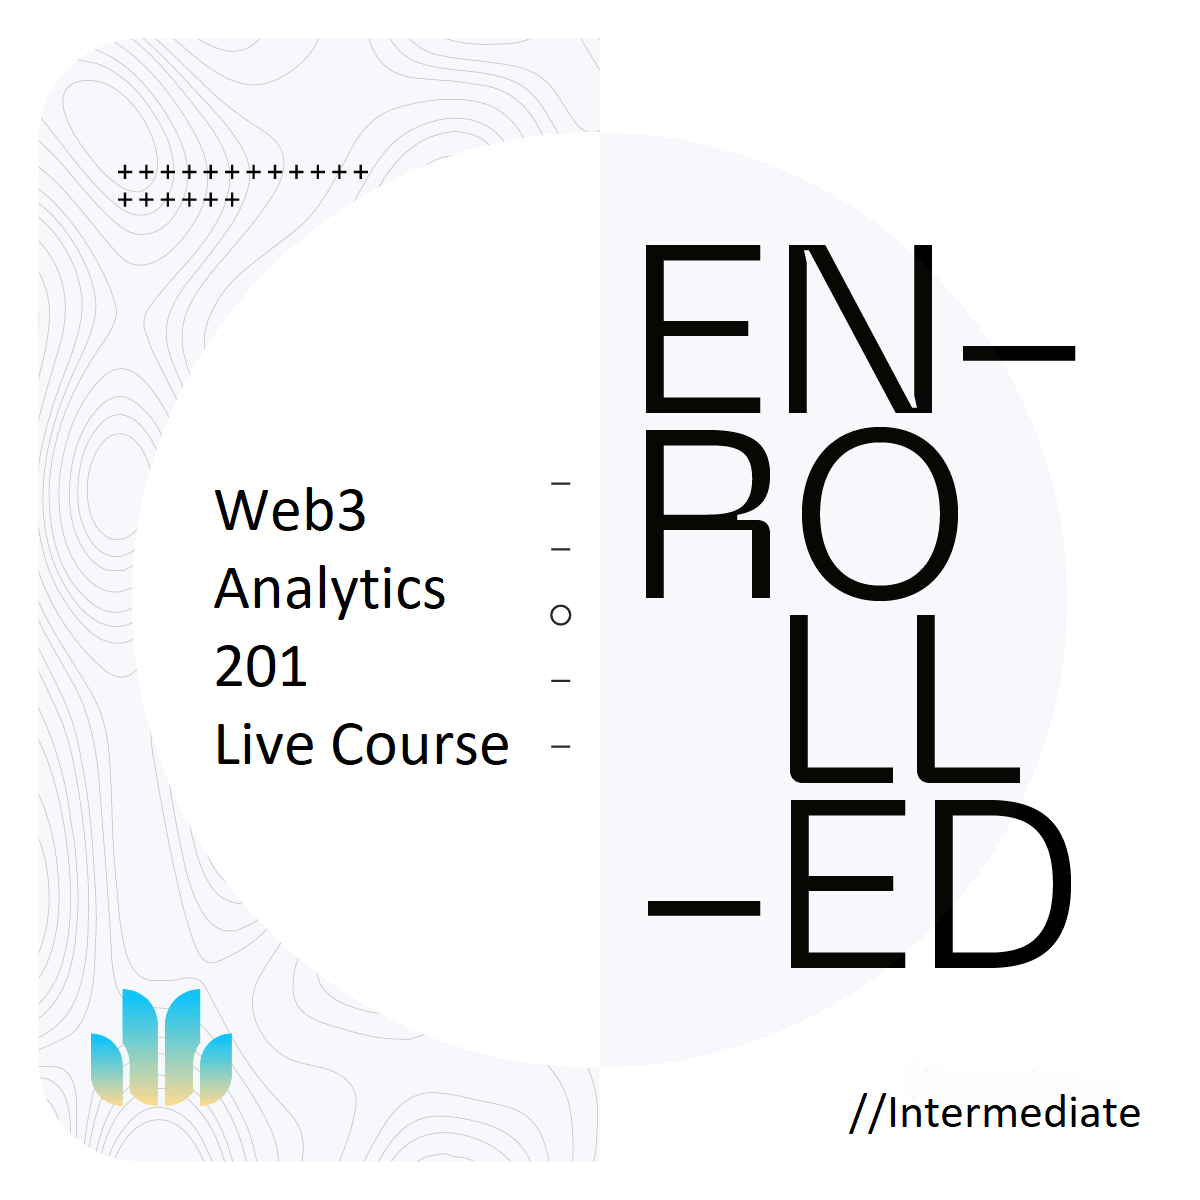 Web3 Analytics 201 Live Course Cohort 1 Enrolled Students